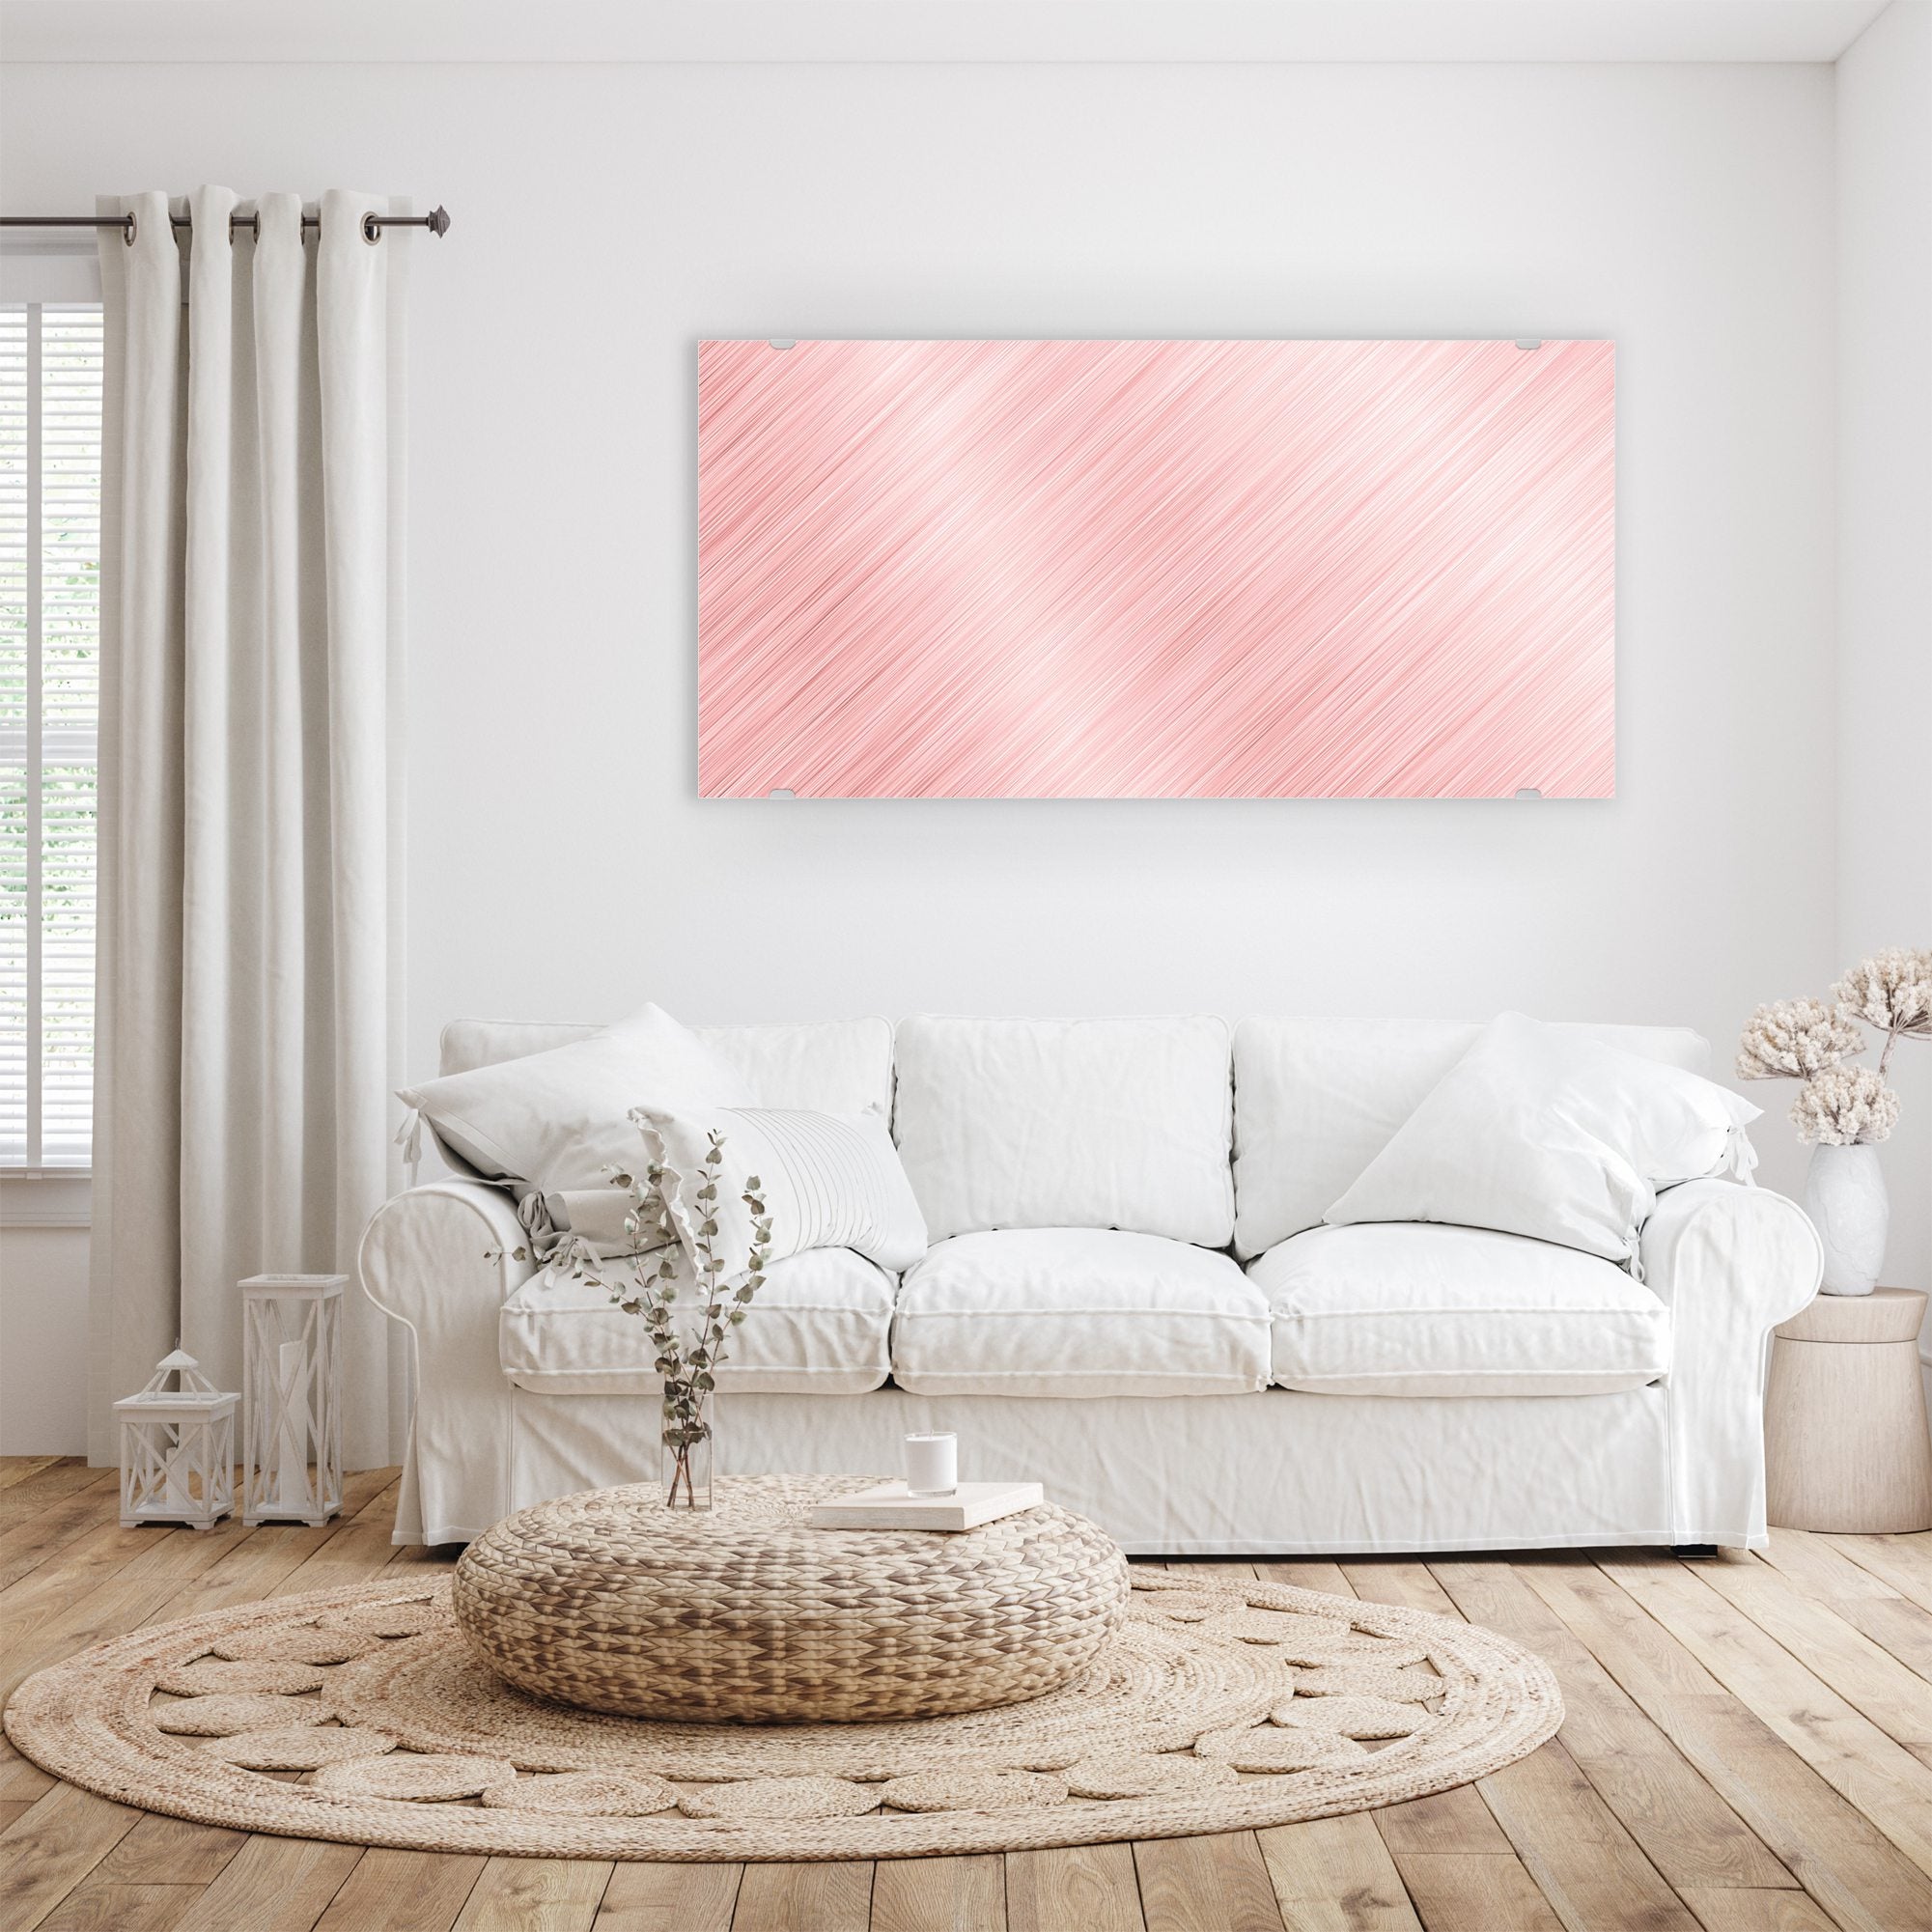 Wandbild - Rosa Hintergrund